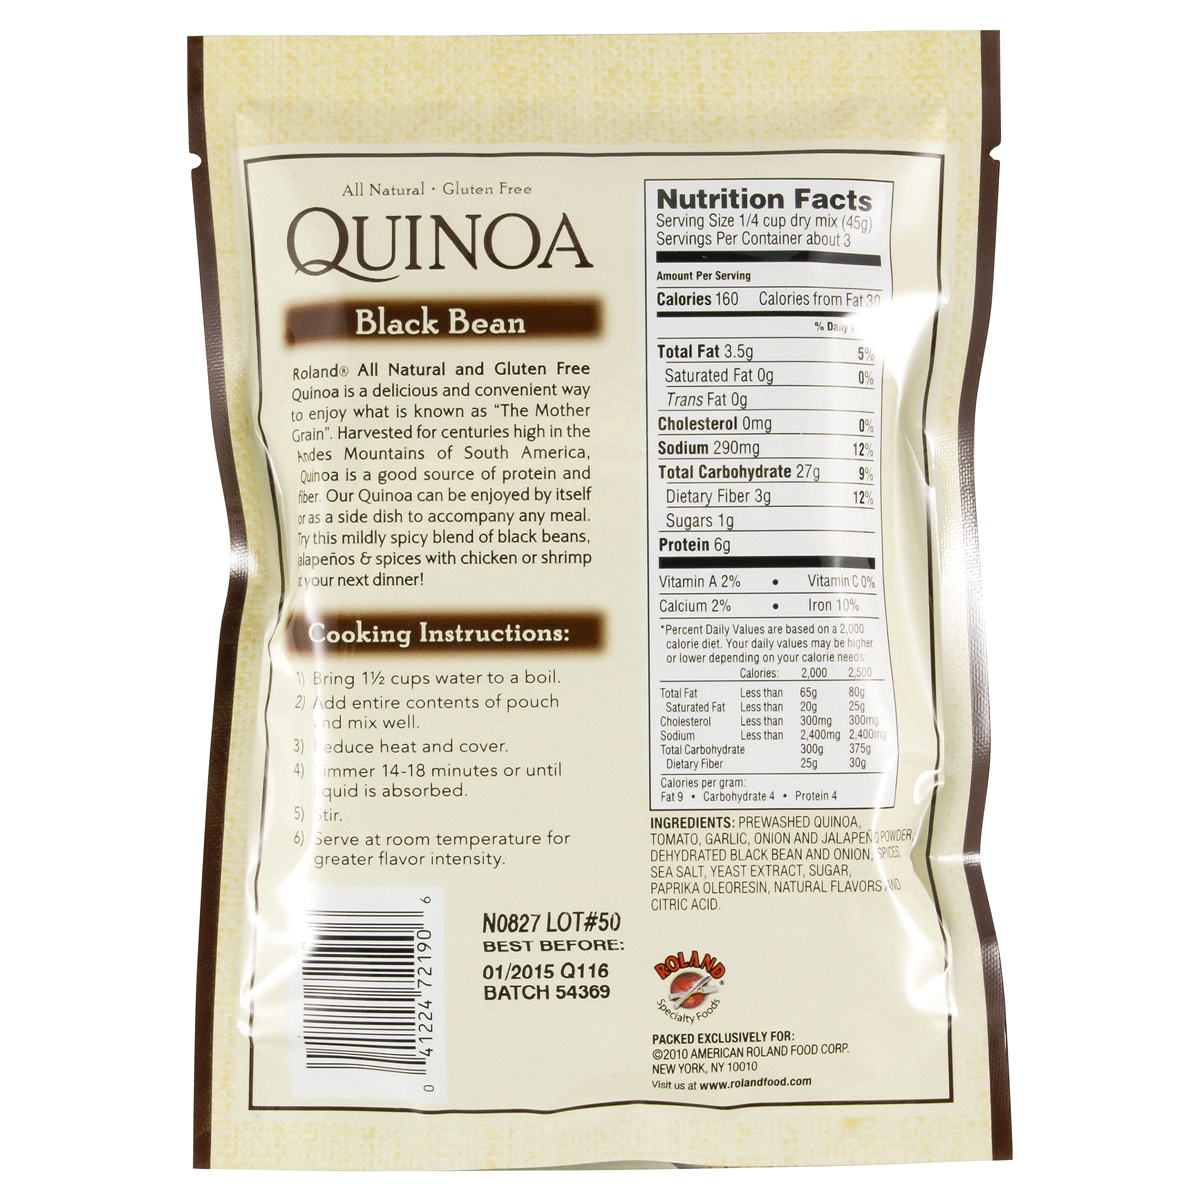 slide 2 of 2, Roland Black Bean Quinoa, 5.46 oz